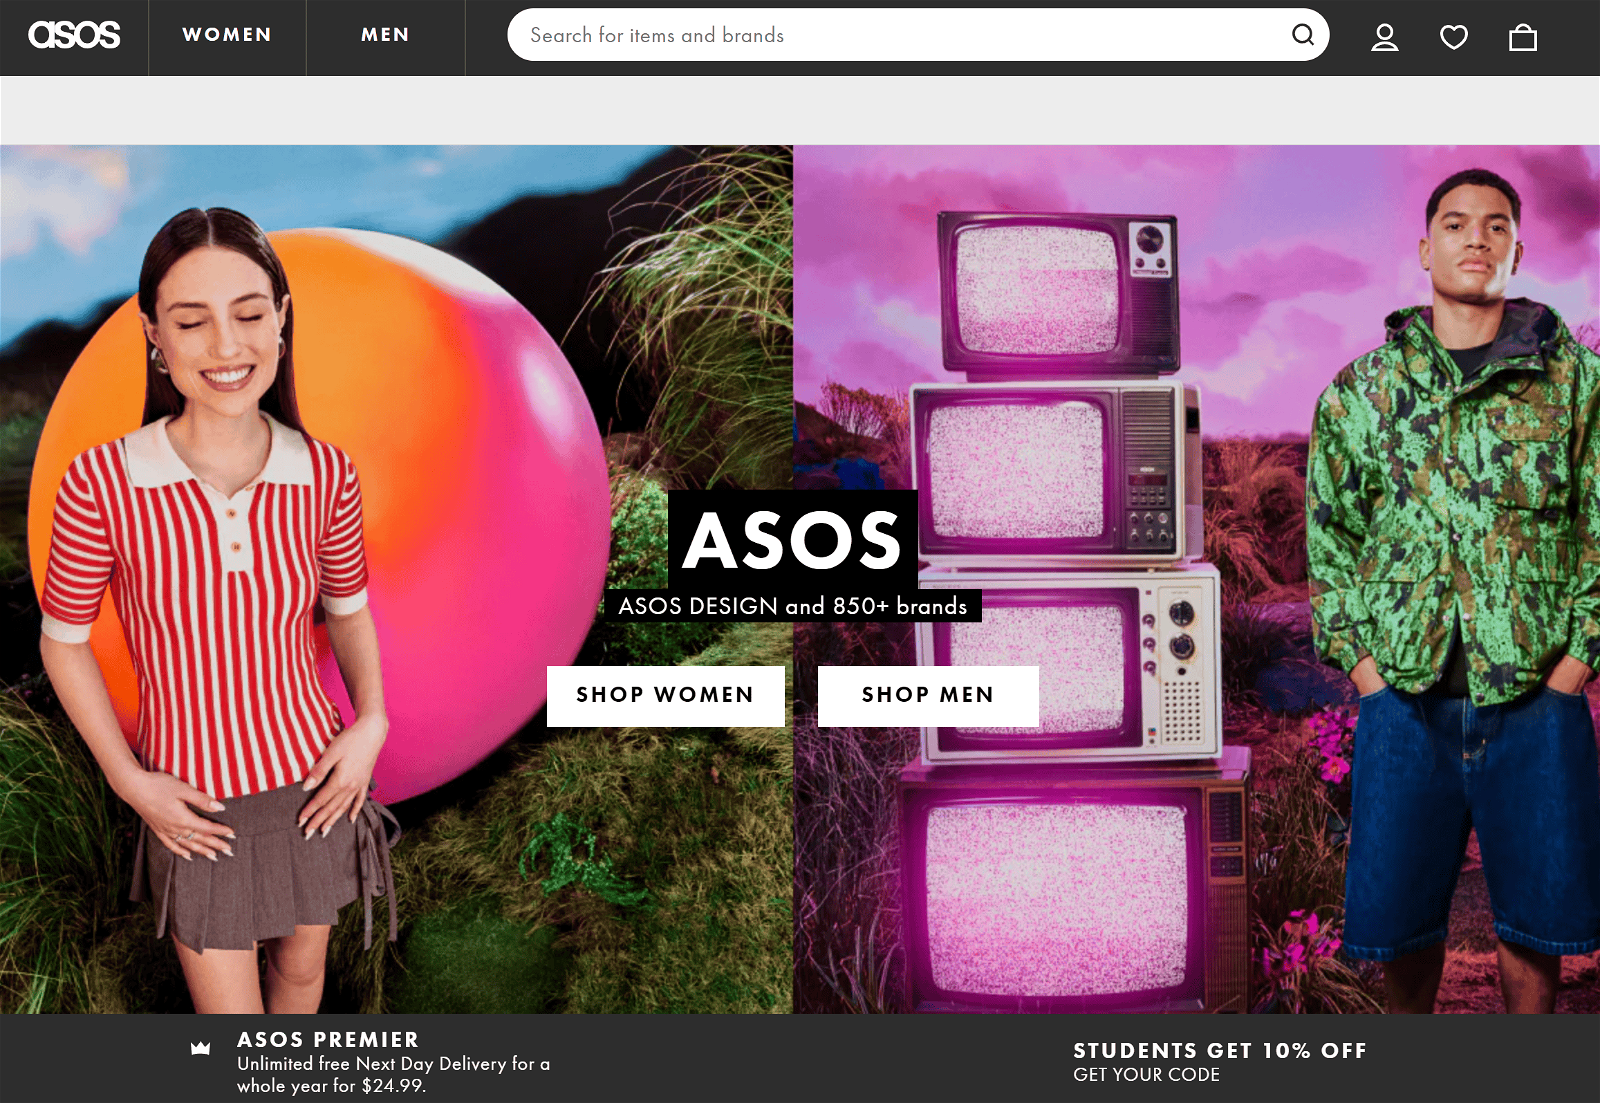 ASOS Homepage